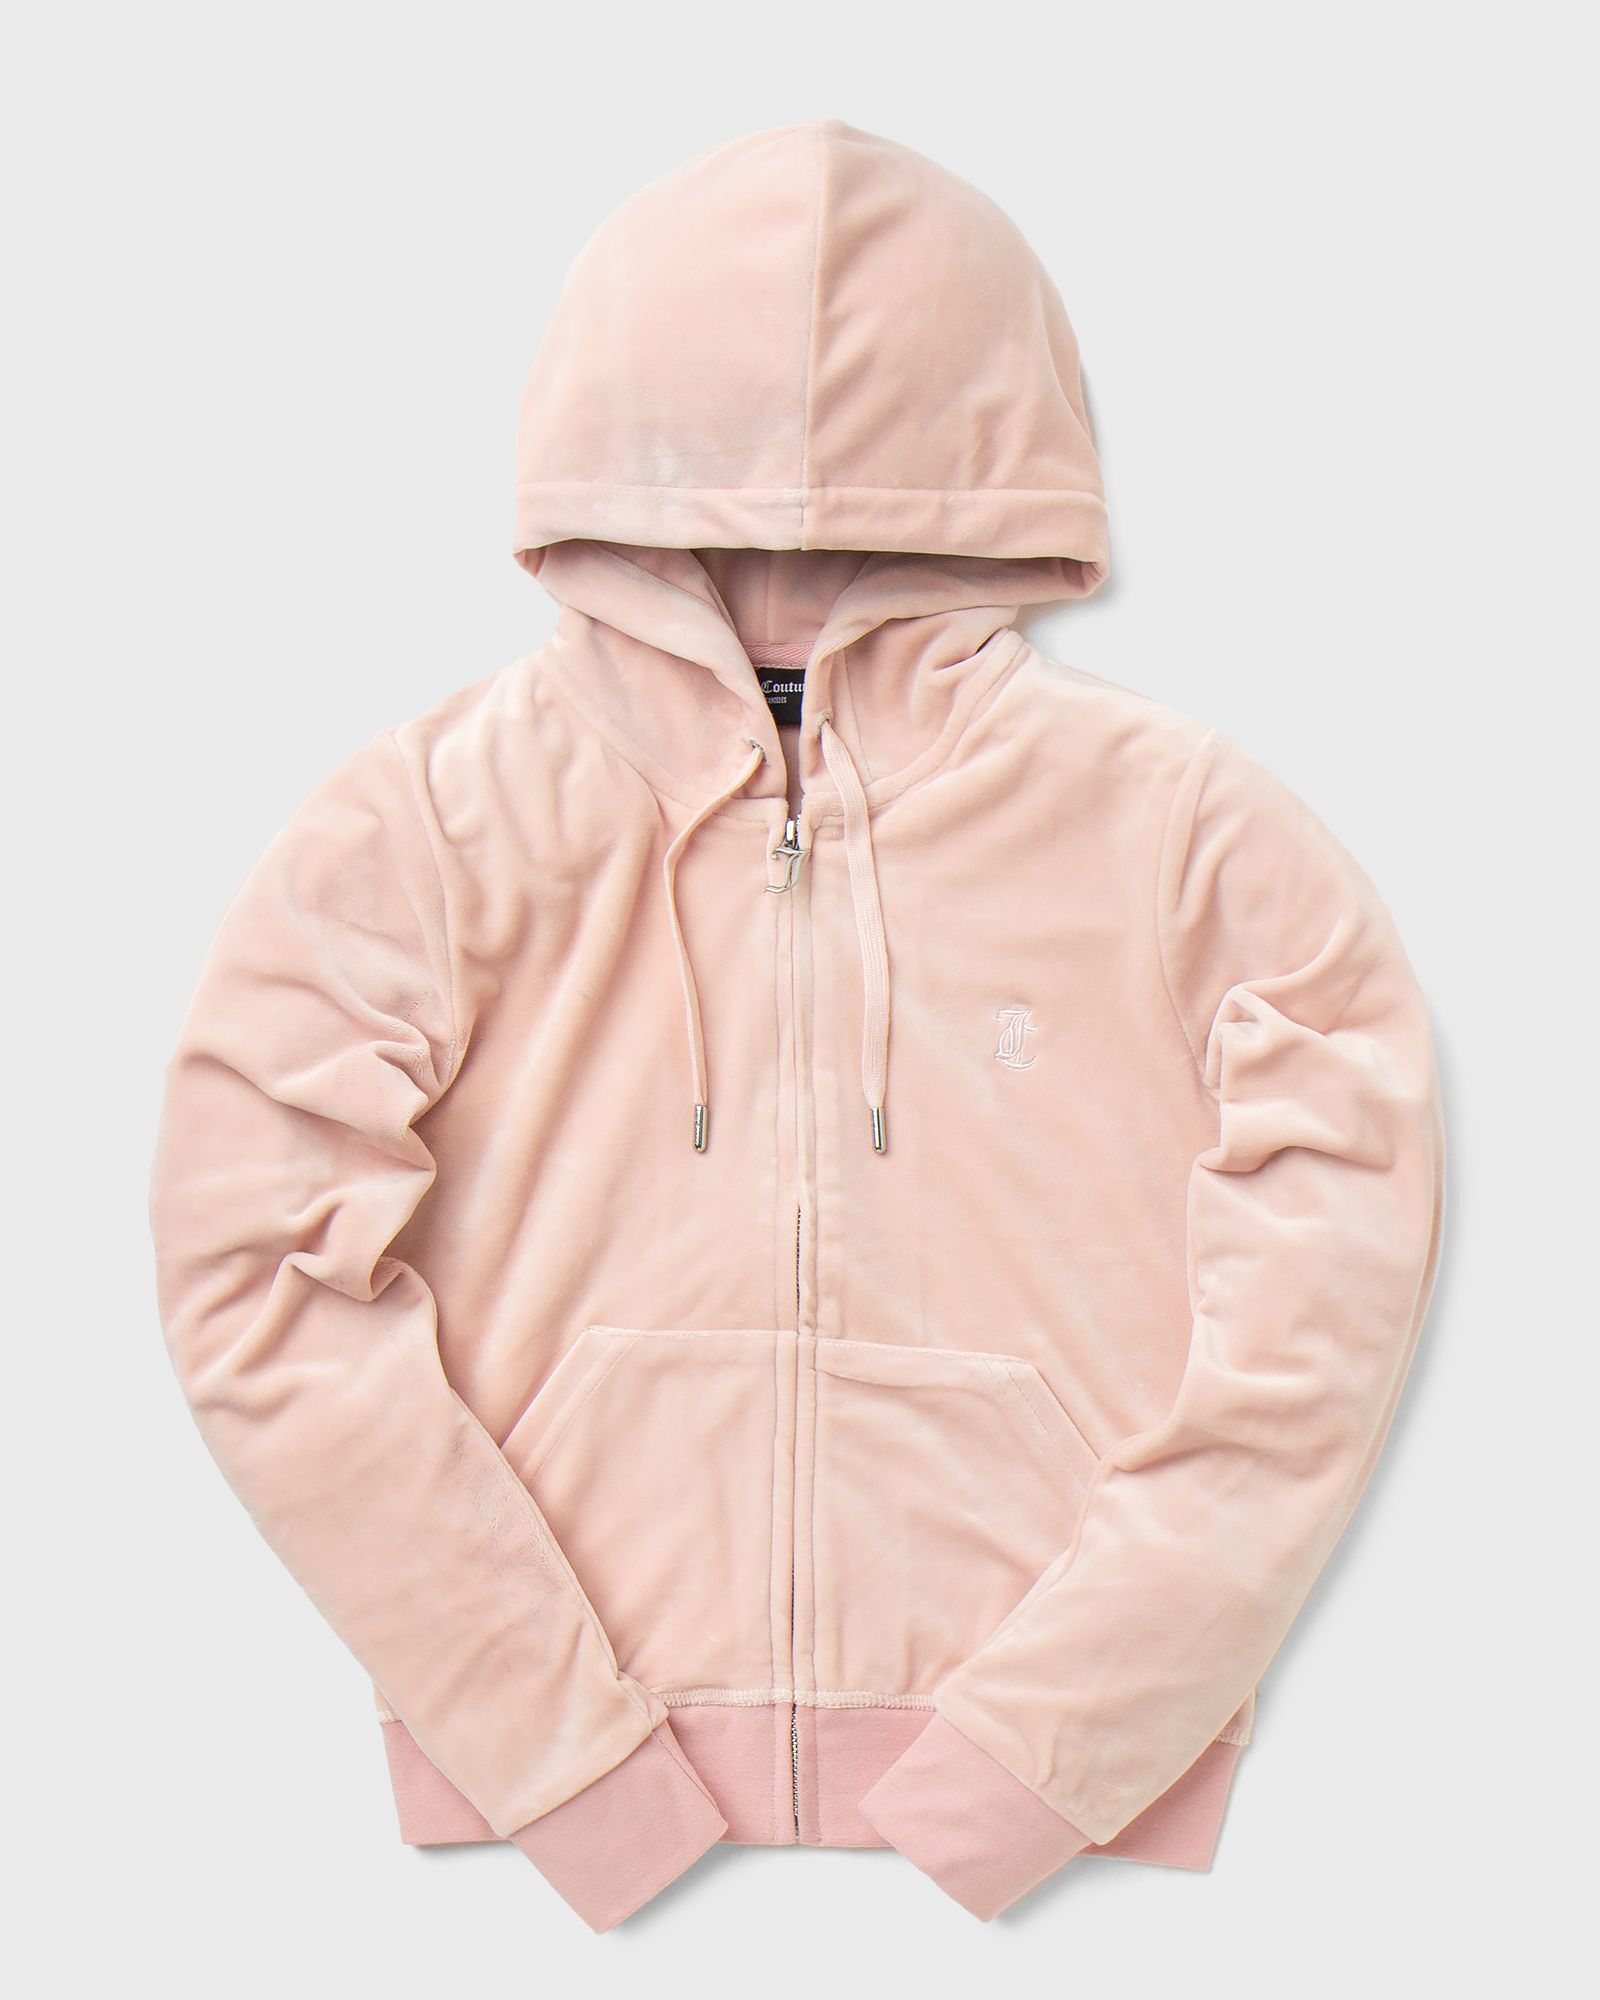 Juicy Couture - classic velour robertson zip hoodie women track jackets|zippers pink in größe:l